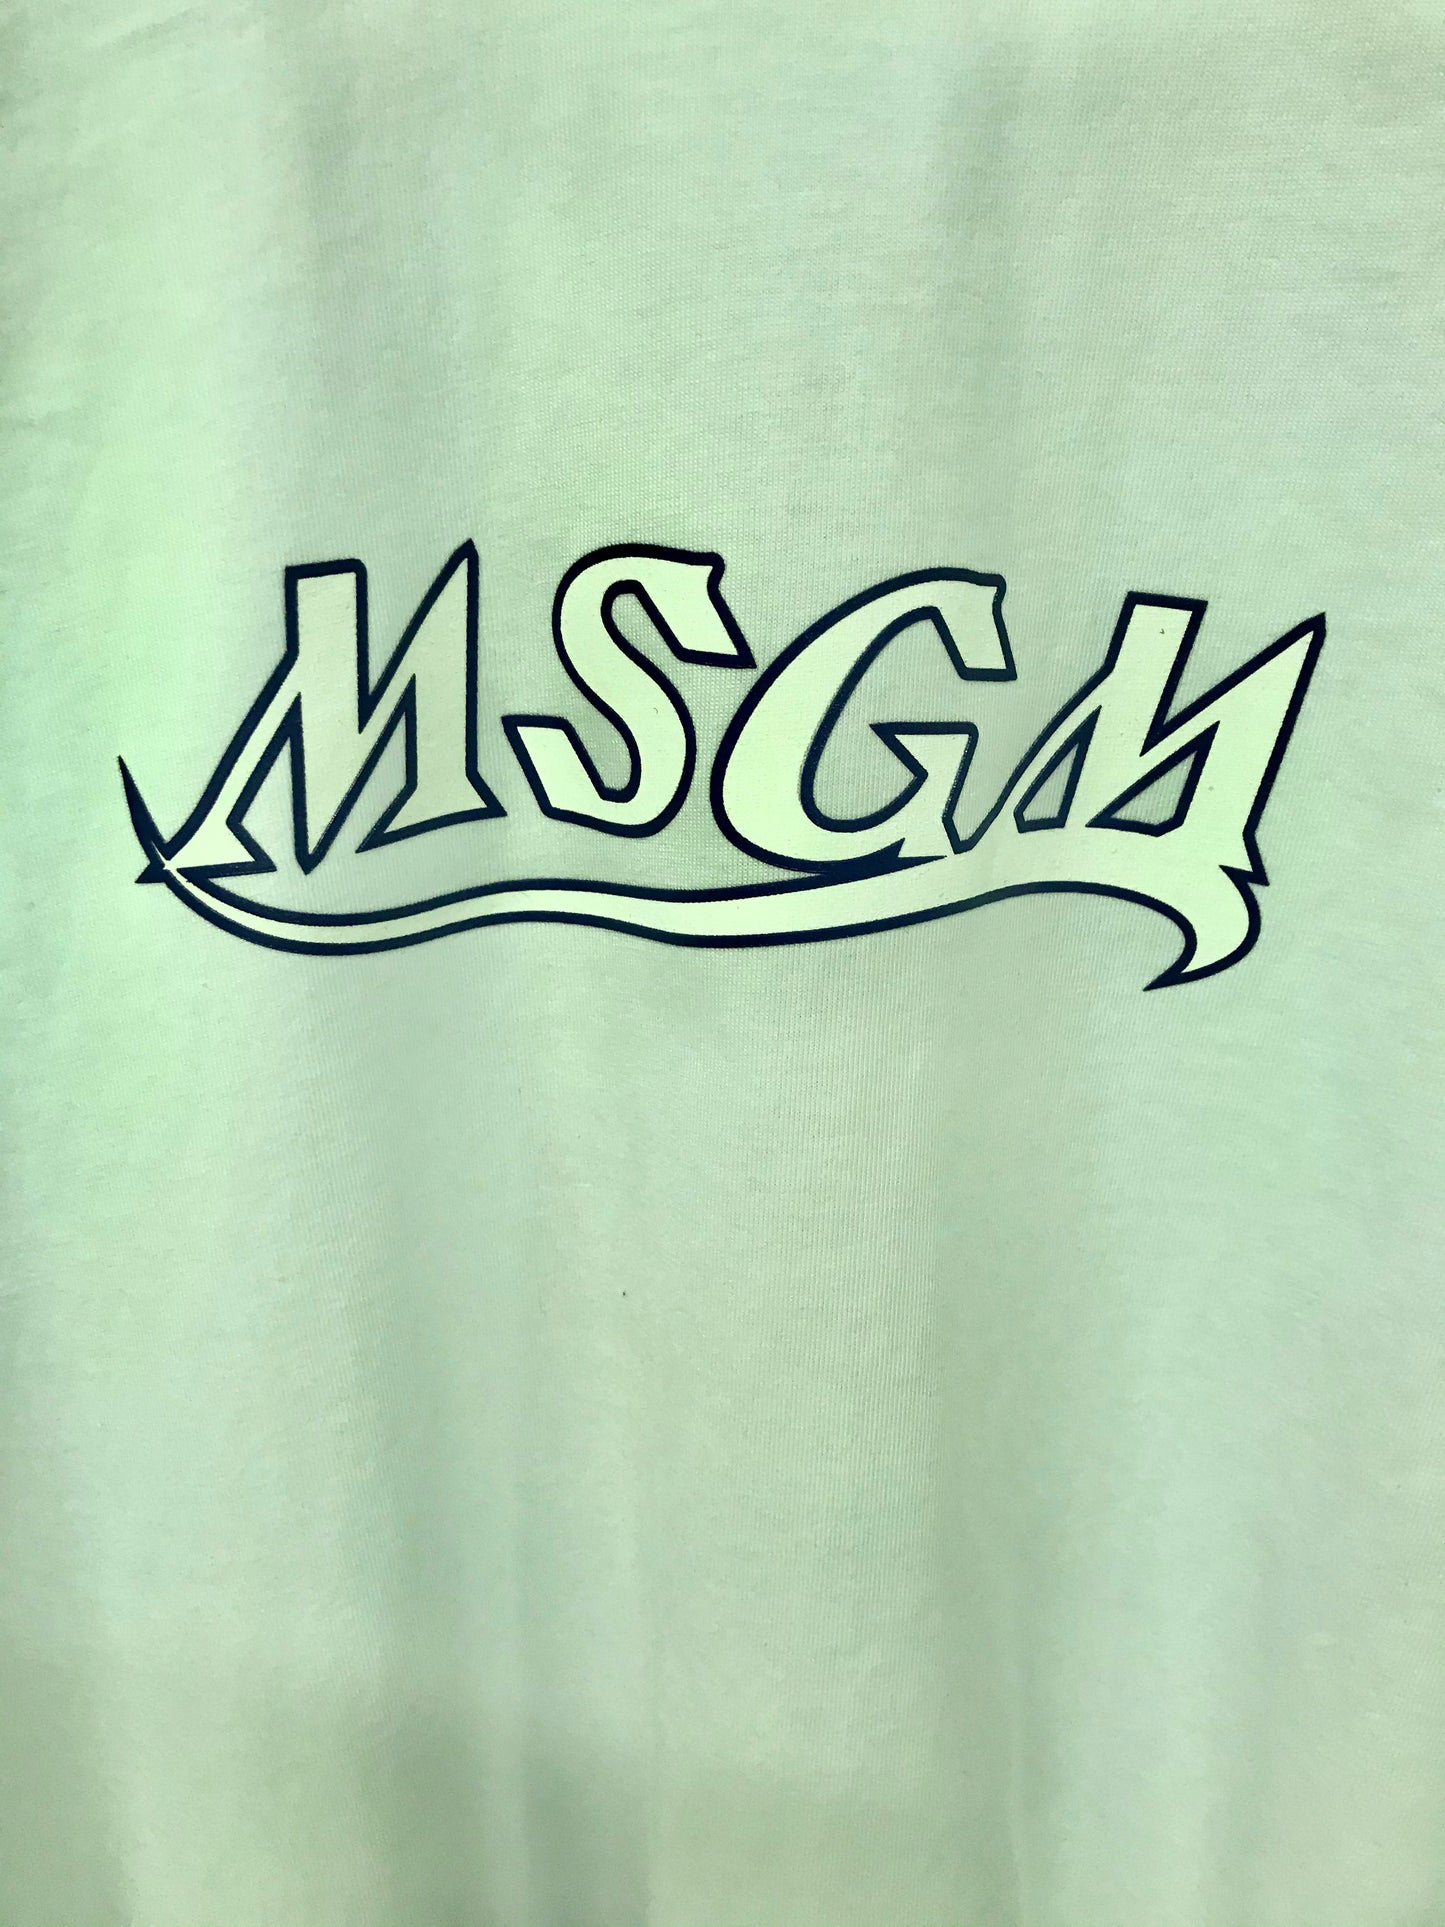 MSGM T-SHIRT